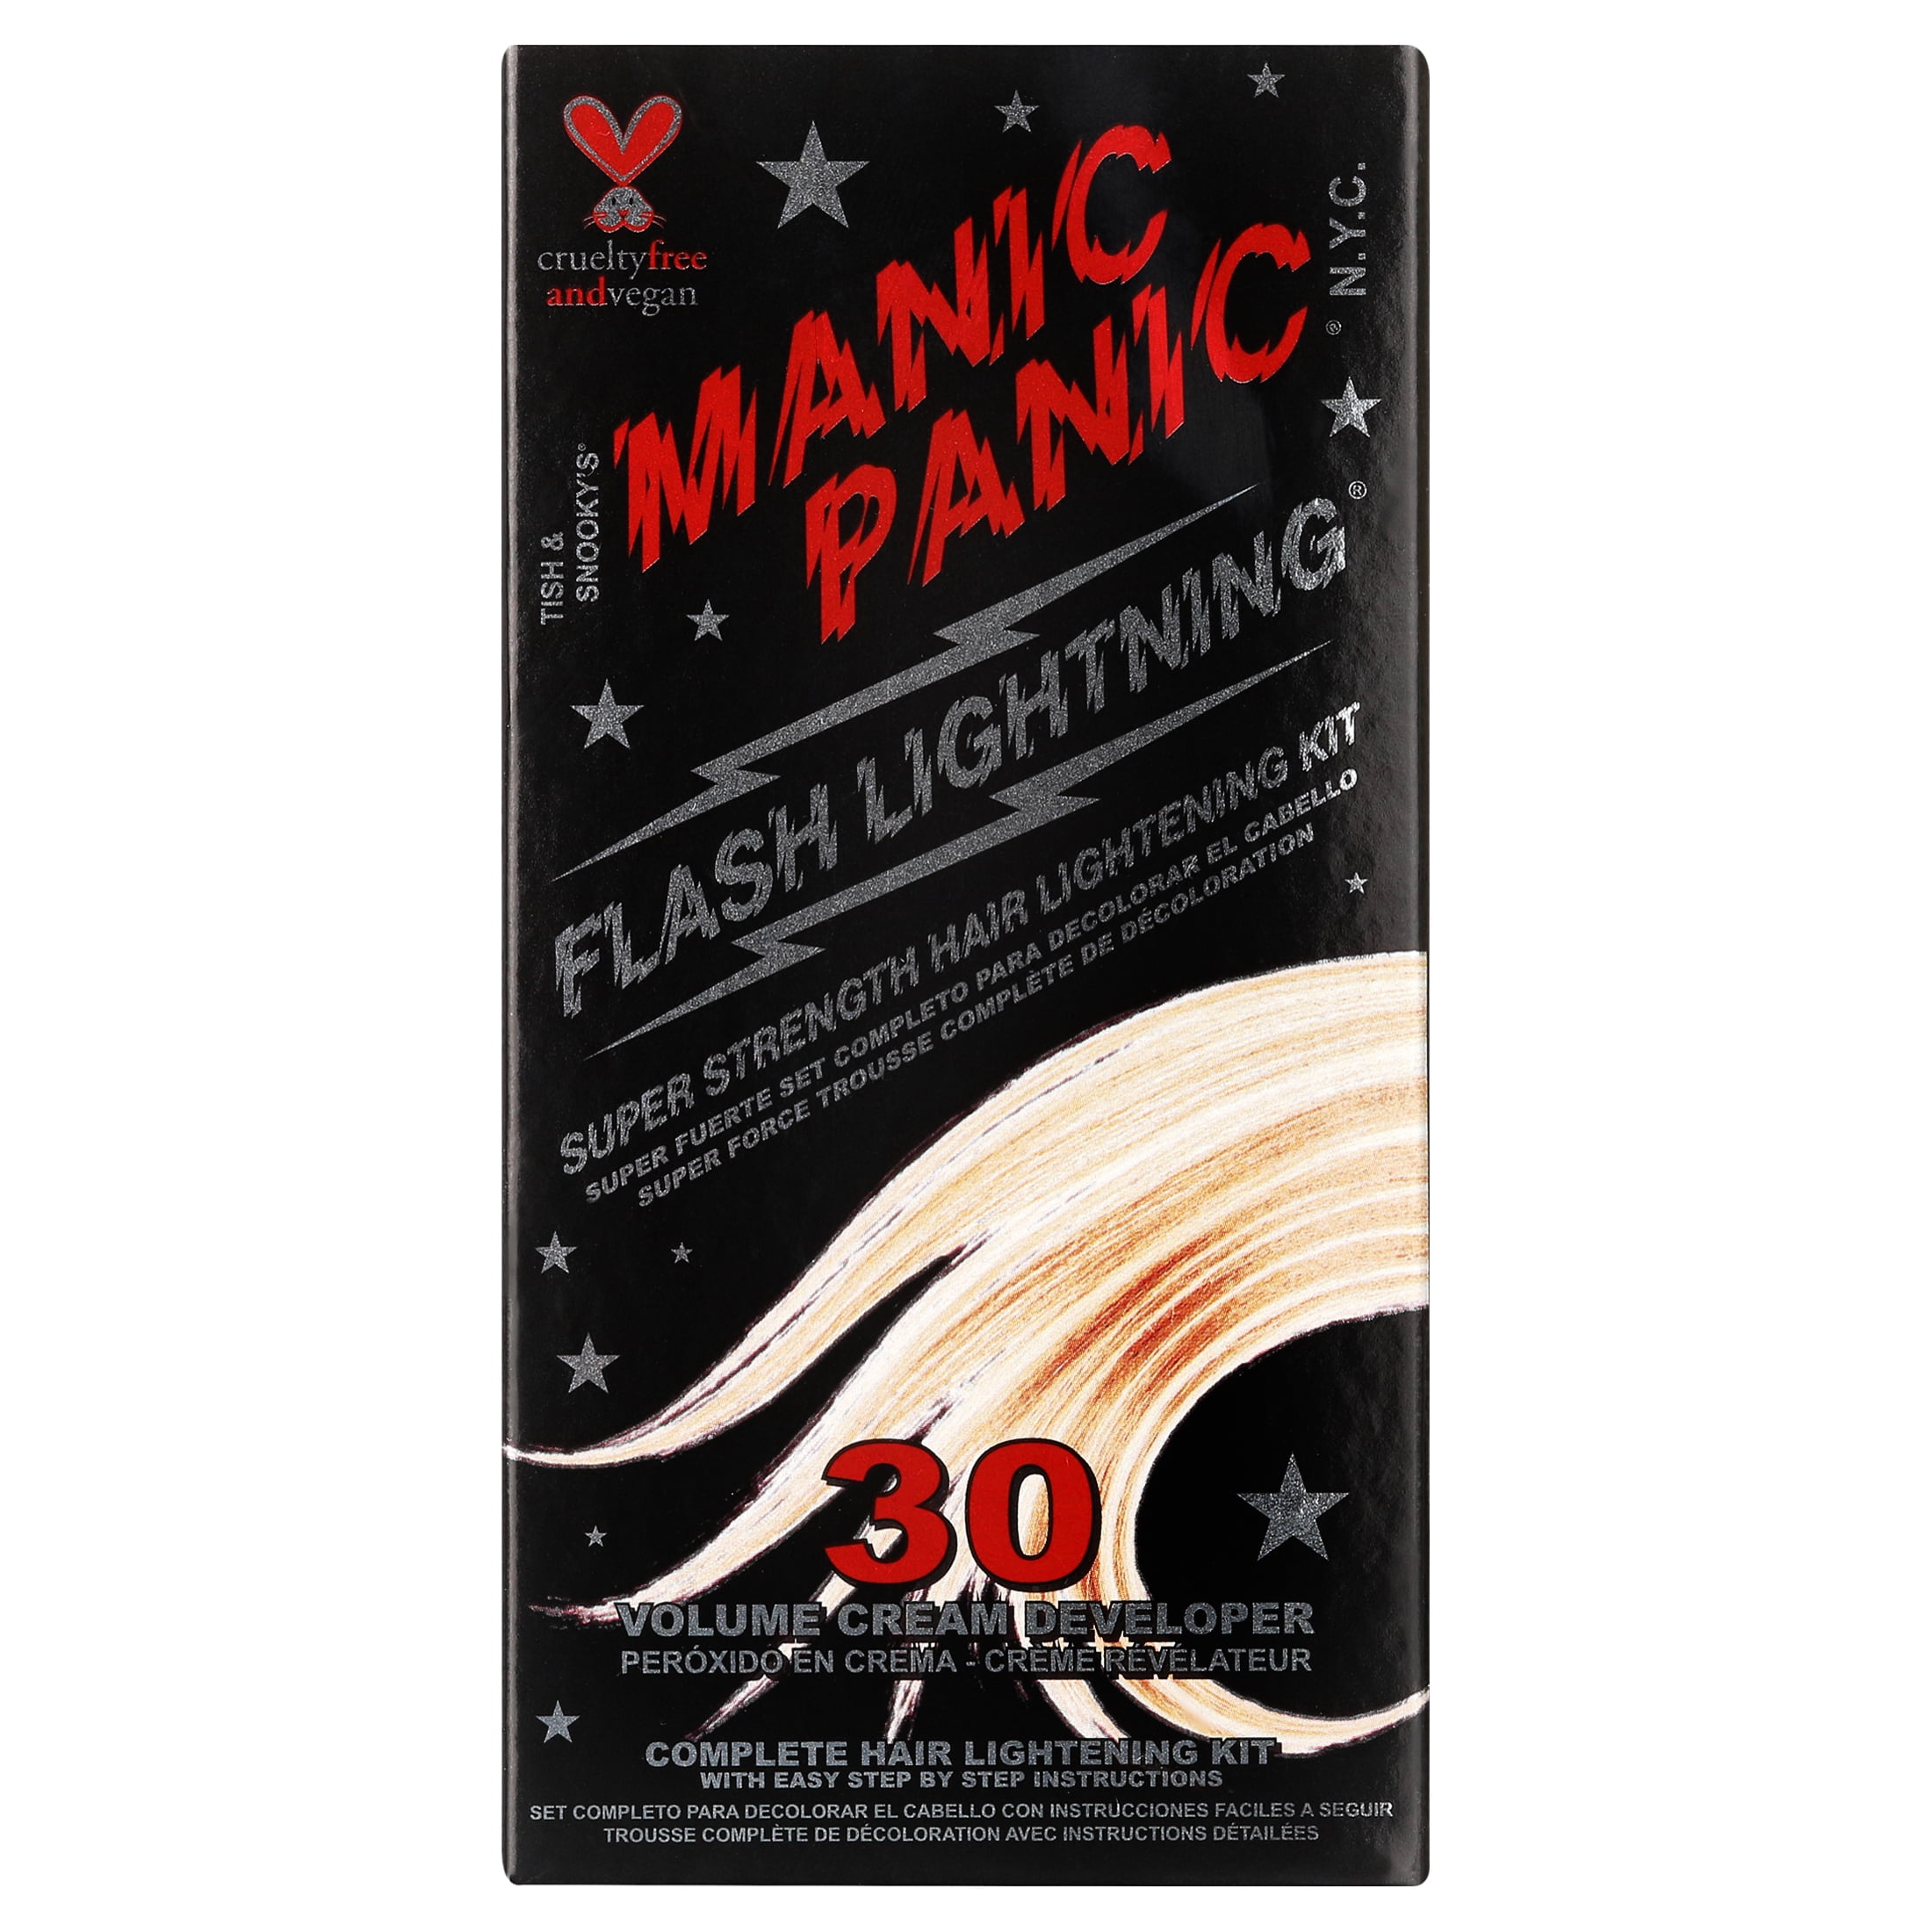 Manic Panic Flash Lightning Bleach Kit 30 Volume - Westside Beauty